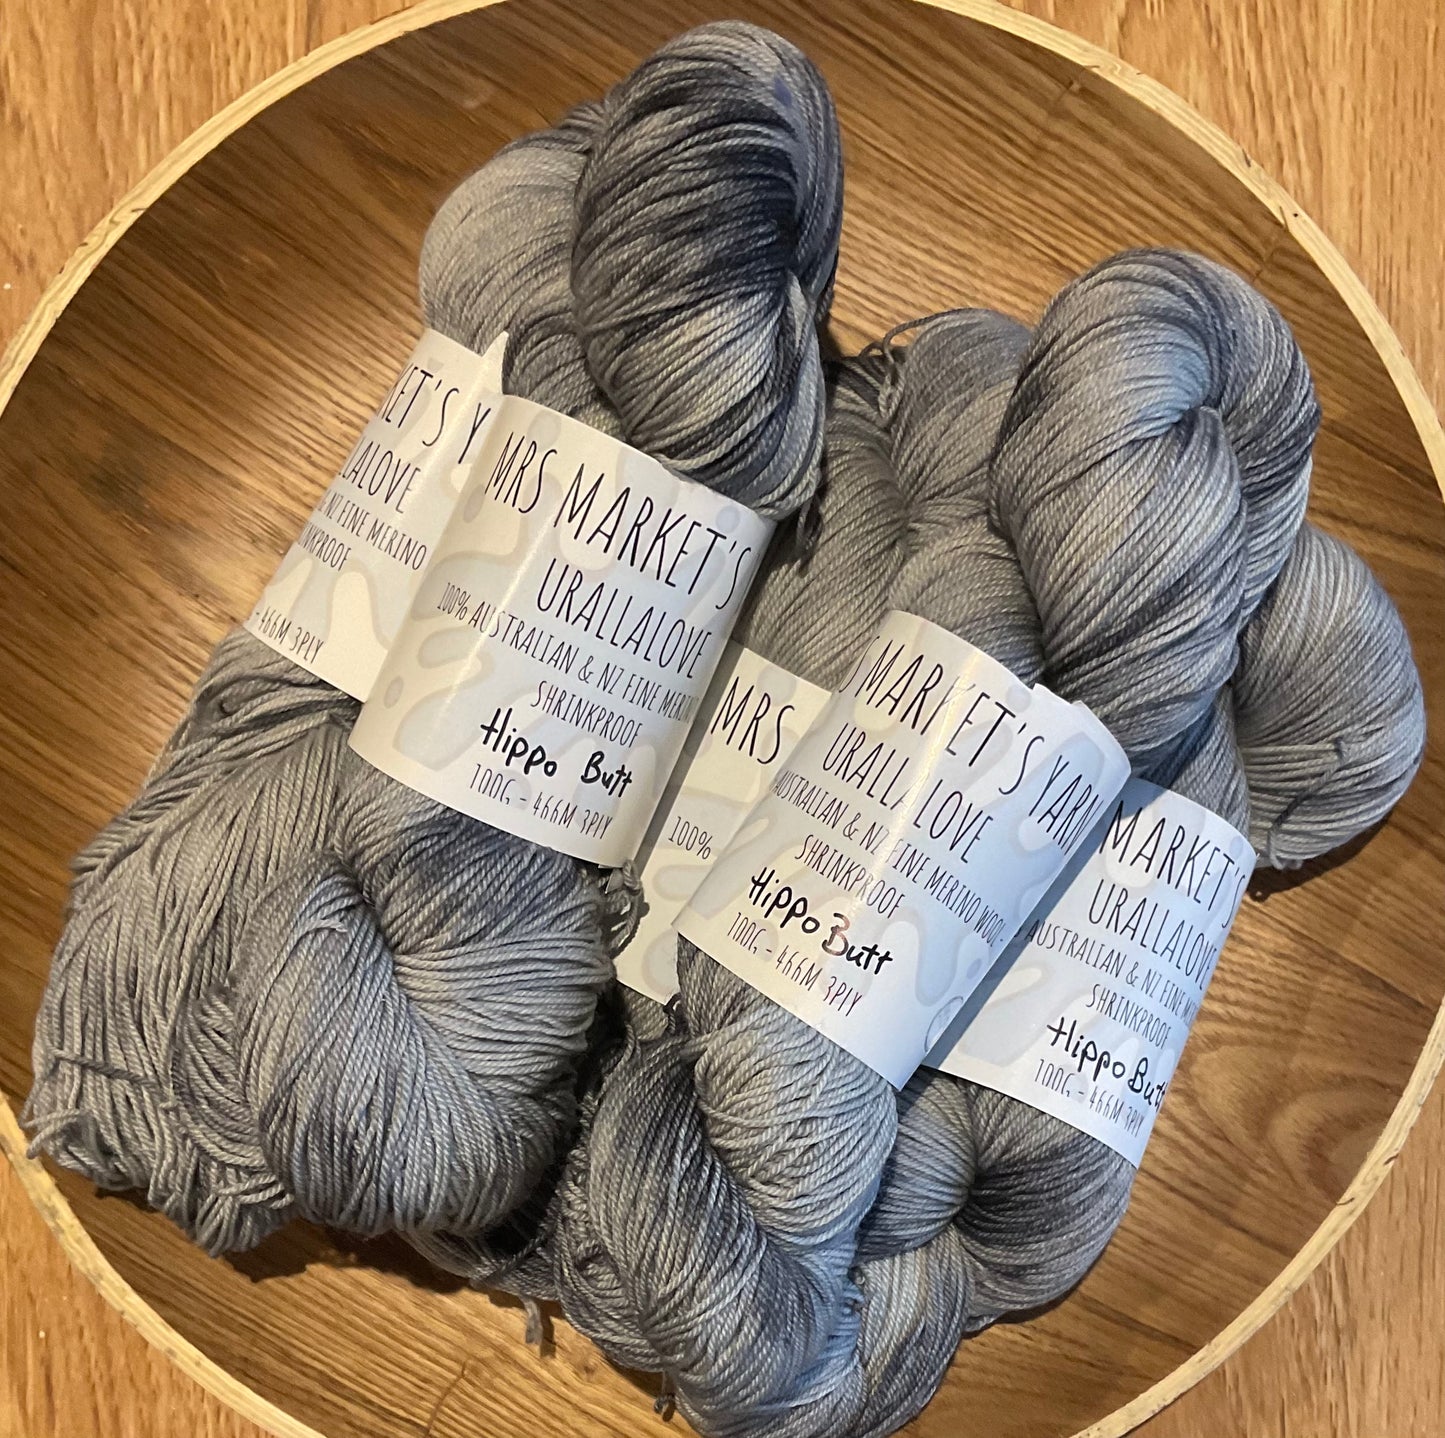 Mrs Markets Urallalove 3ply Hand dyed Yarn